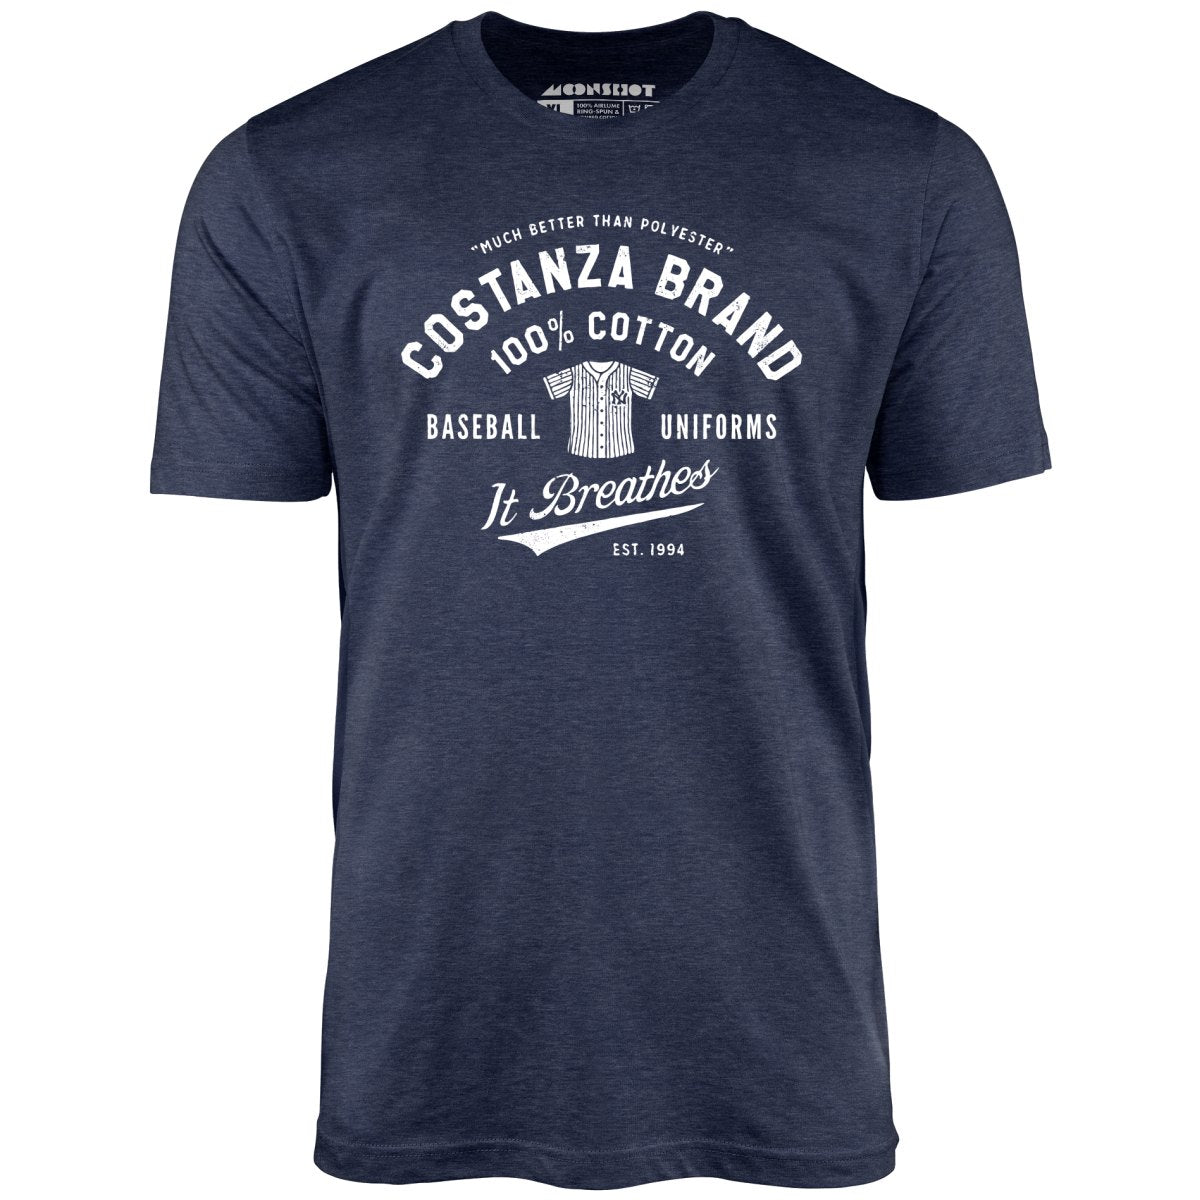 Costanza Brand Cotton Baseball Uniforms - Unisex T-Shirt